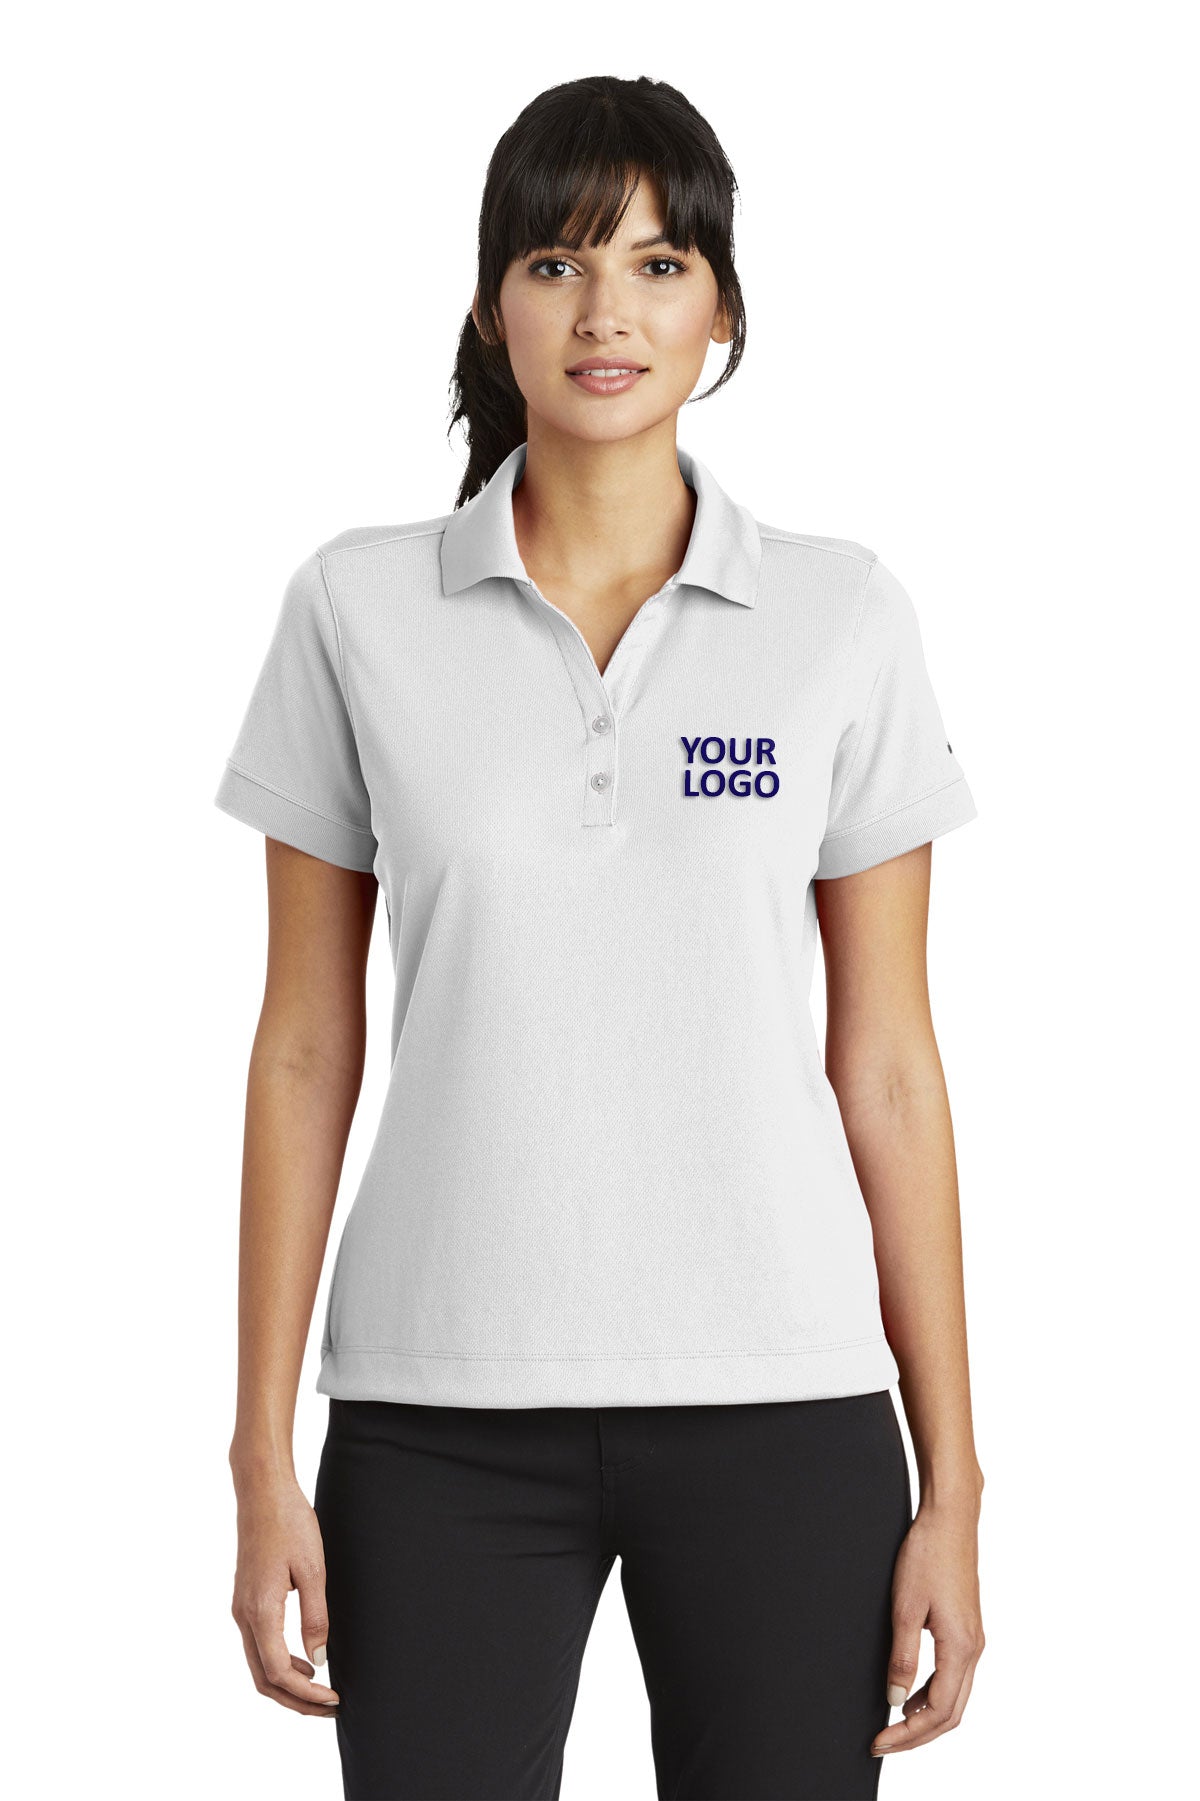 nike white 286772 polo shirts with embroidered custom logo